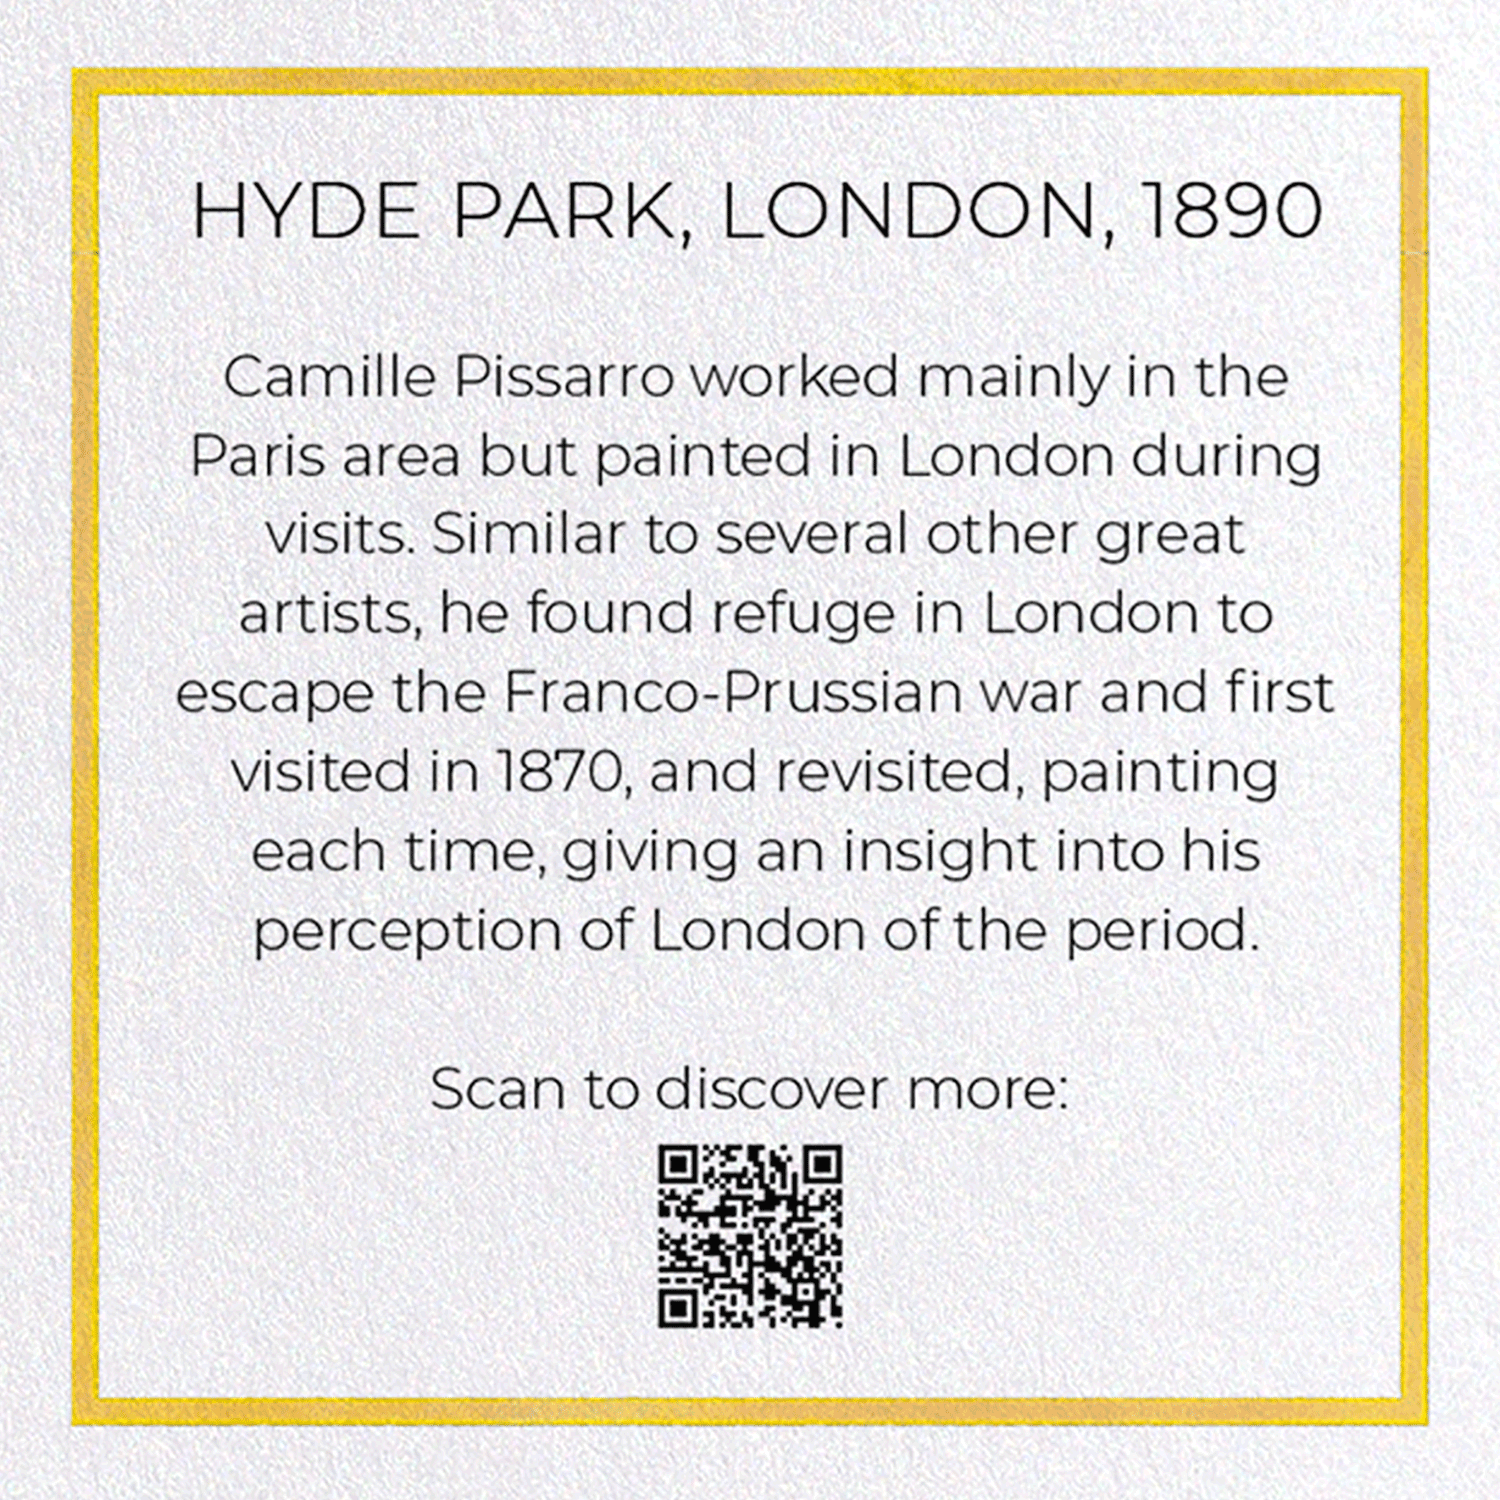 HYDE PARK, LONDON, 1890